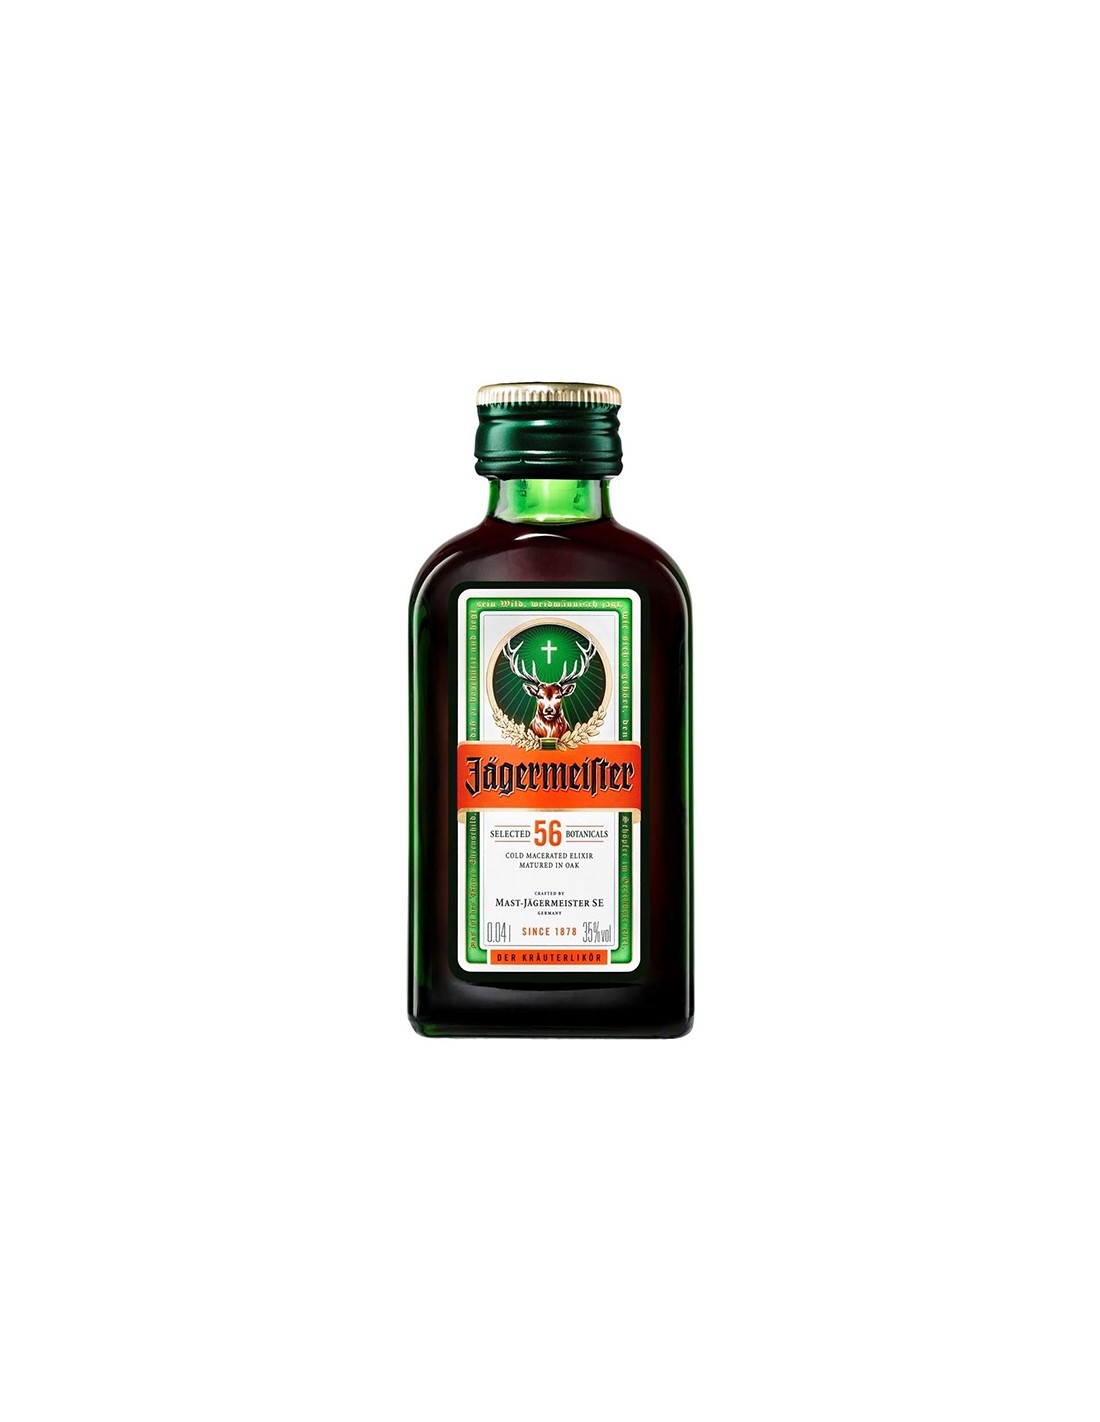 Lichior digestiv Jagermeister, 35% alc., 0.04L, Germania alcooldiscount.ro